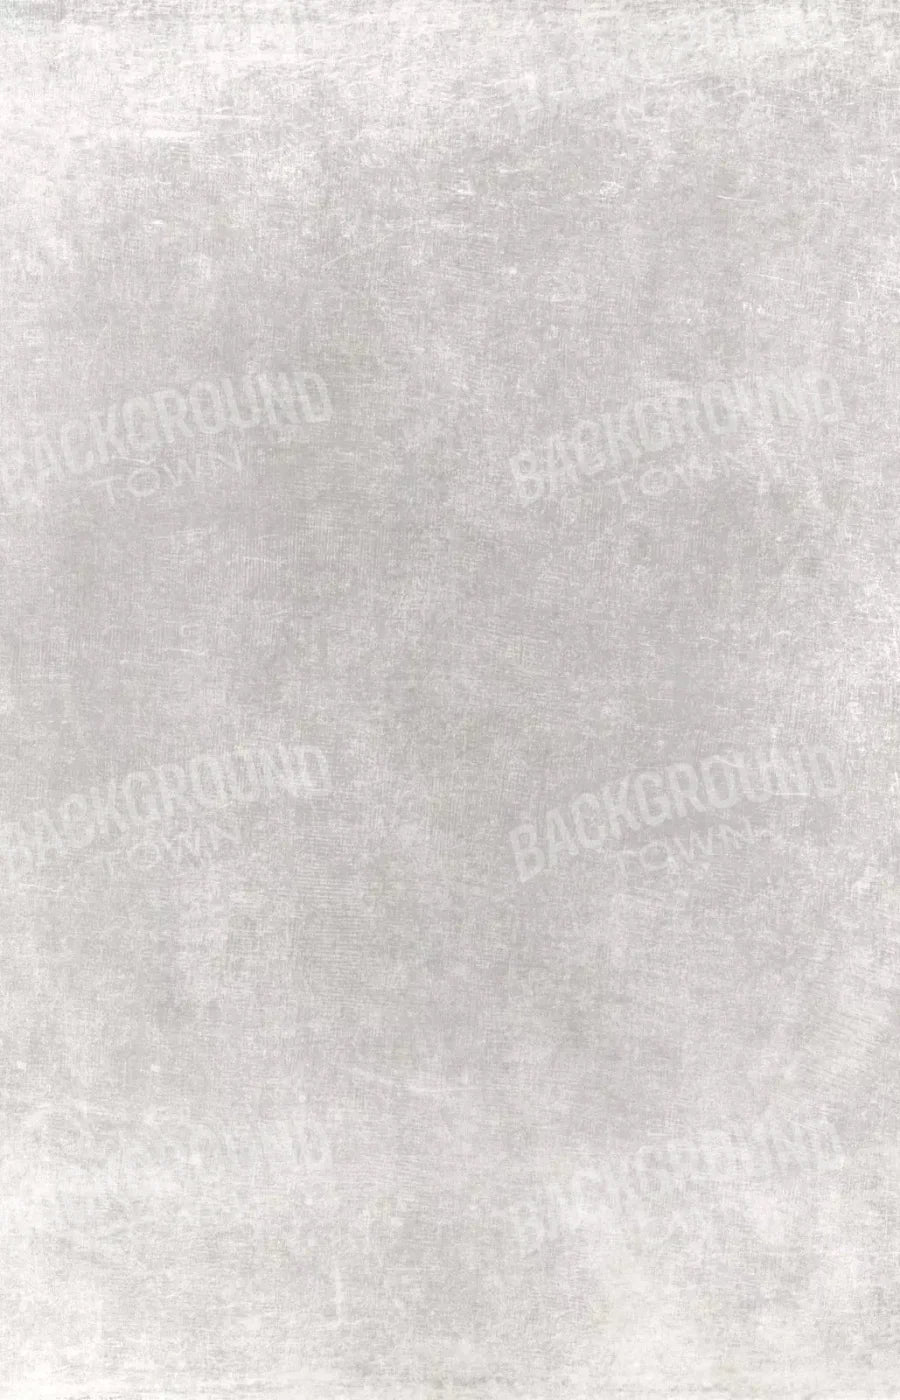 Classic Texture Light Warm Gray 8X12 Ultracloth ( 96 X 144 Inch ) Backdrop